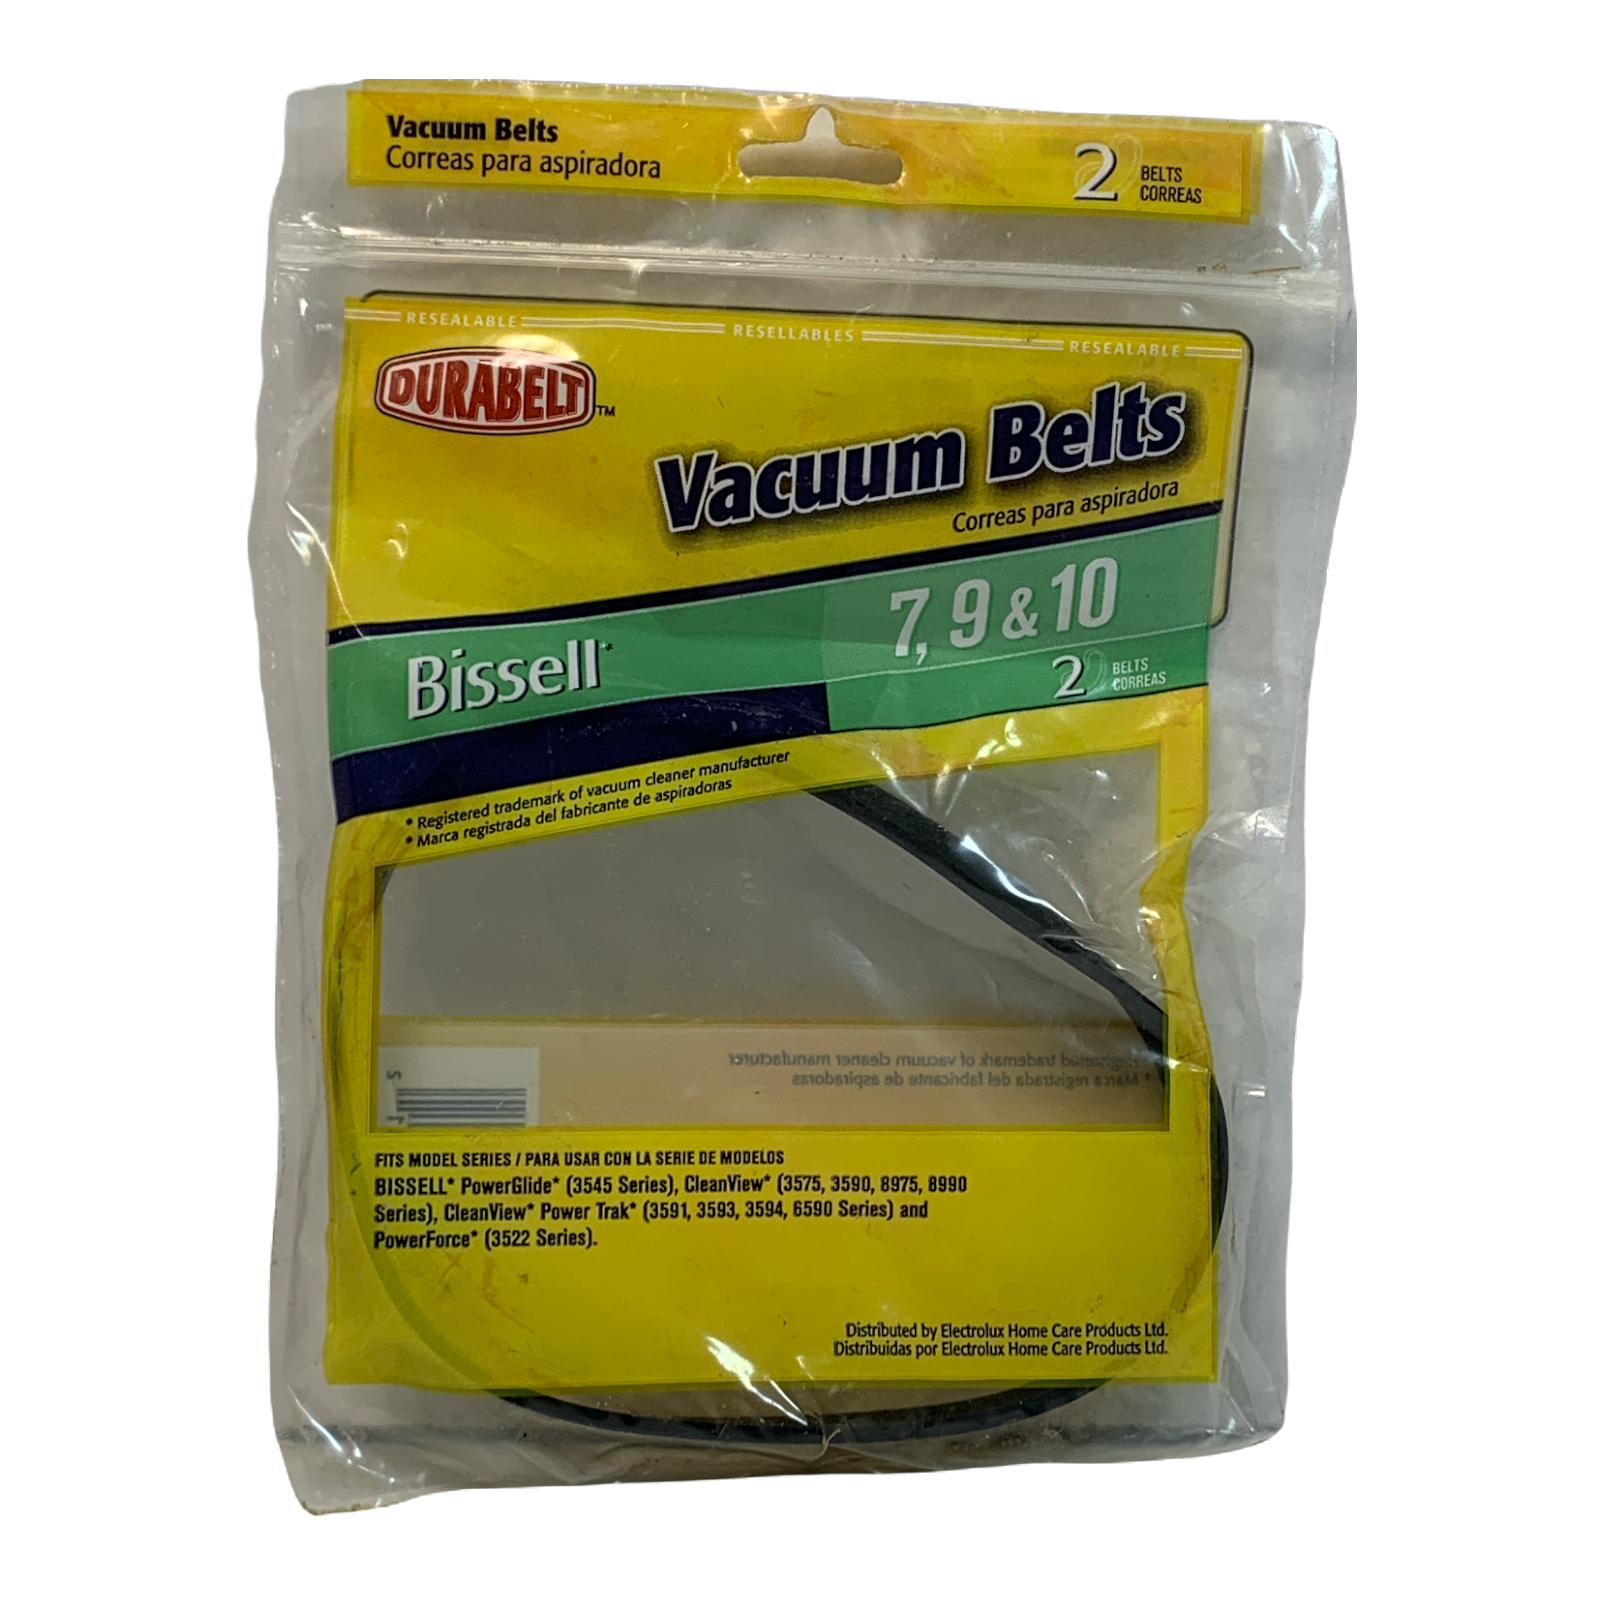 Durabelt Bissell Black & Decker Vacuum Replacement Belts New/open box 2 pack - $3.47